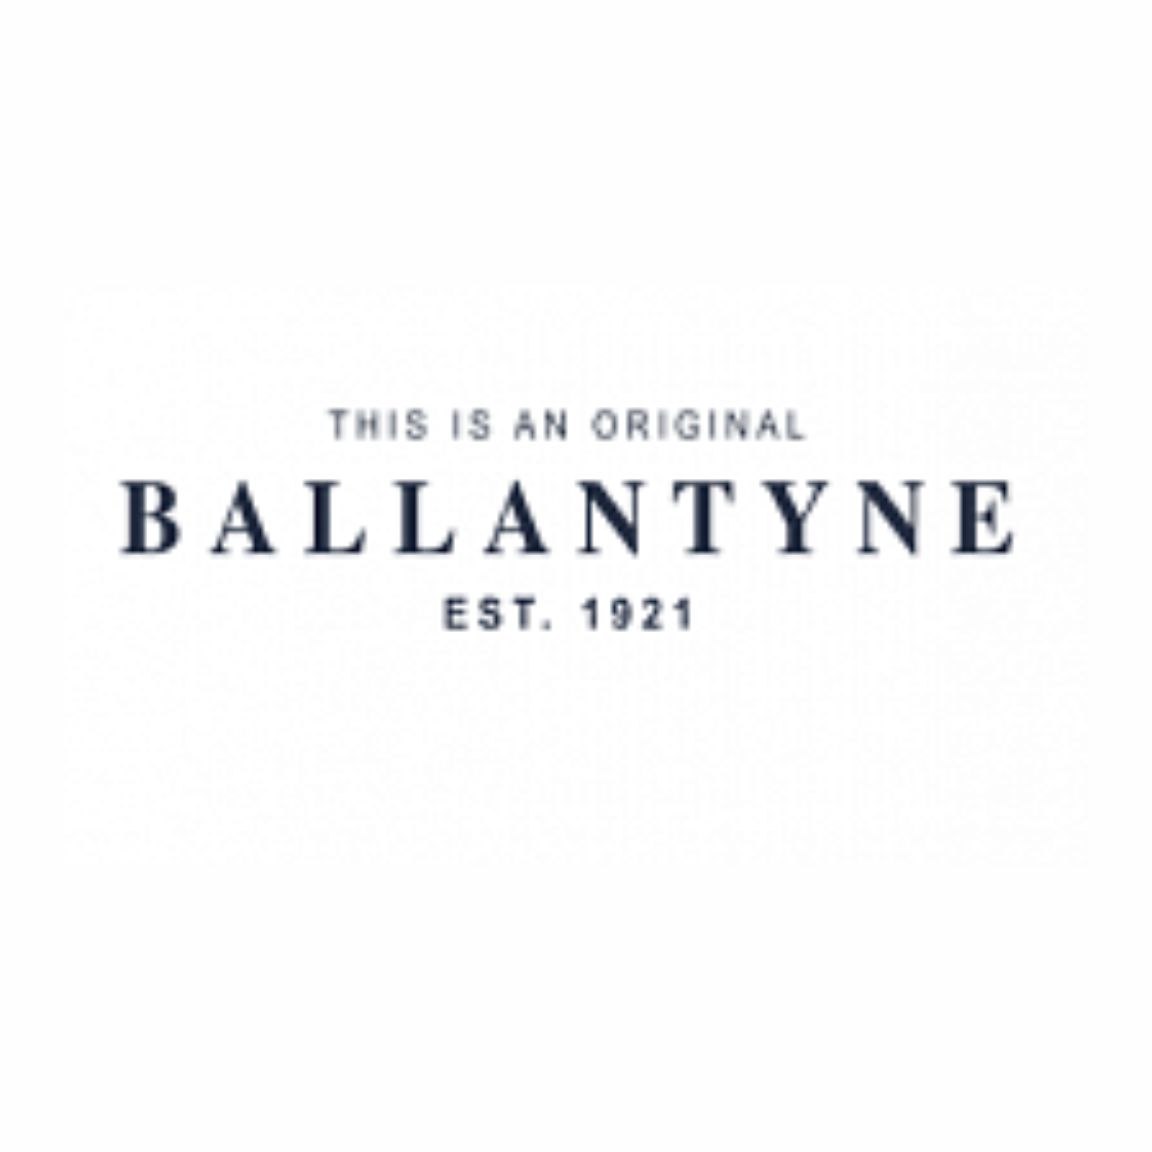 Ballantyne